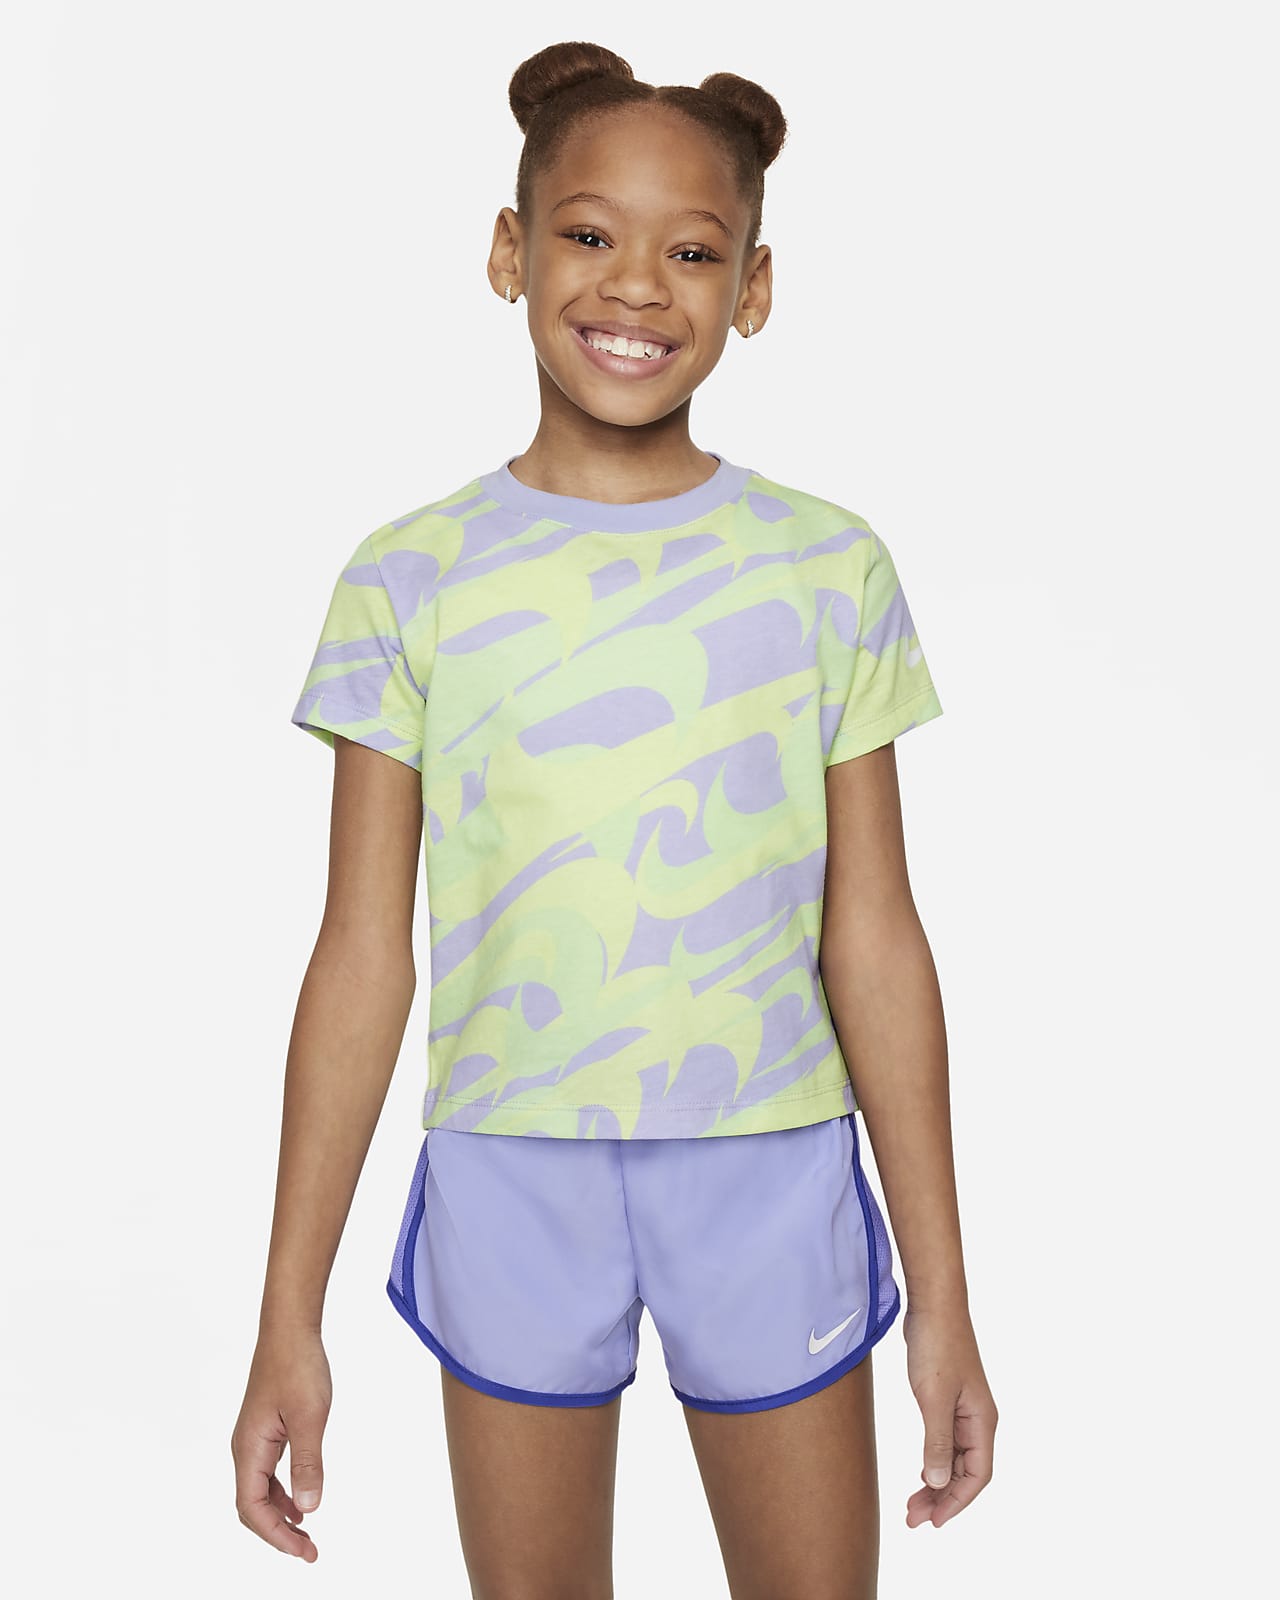 Nike Prep in Your Step T-Shirt mit Grafik für jüngere Kinder